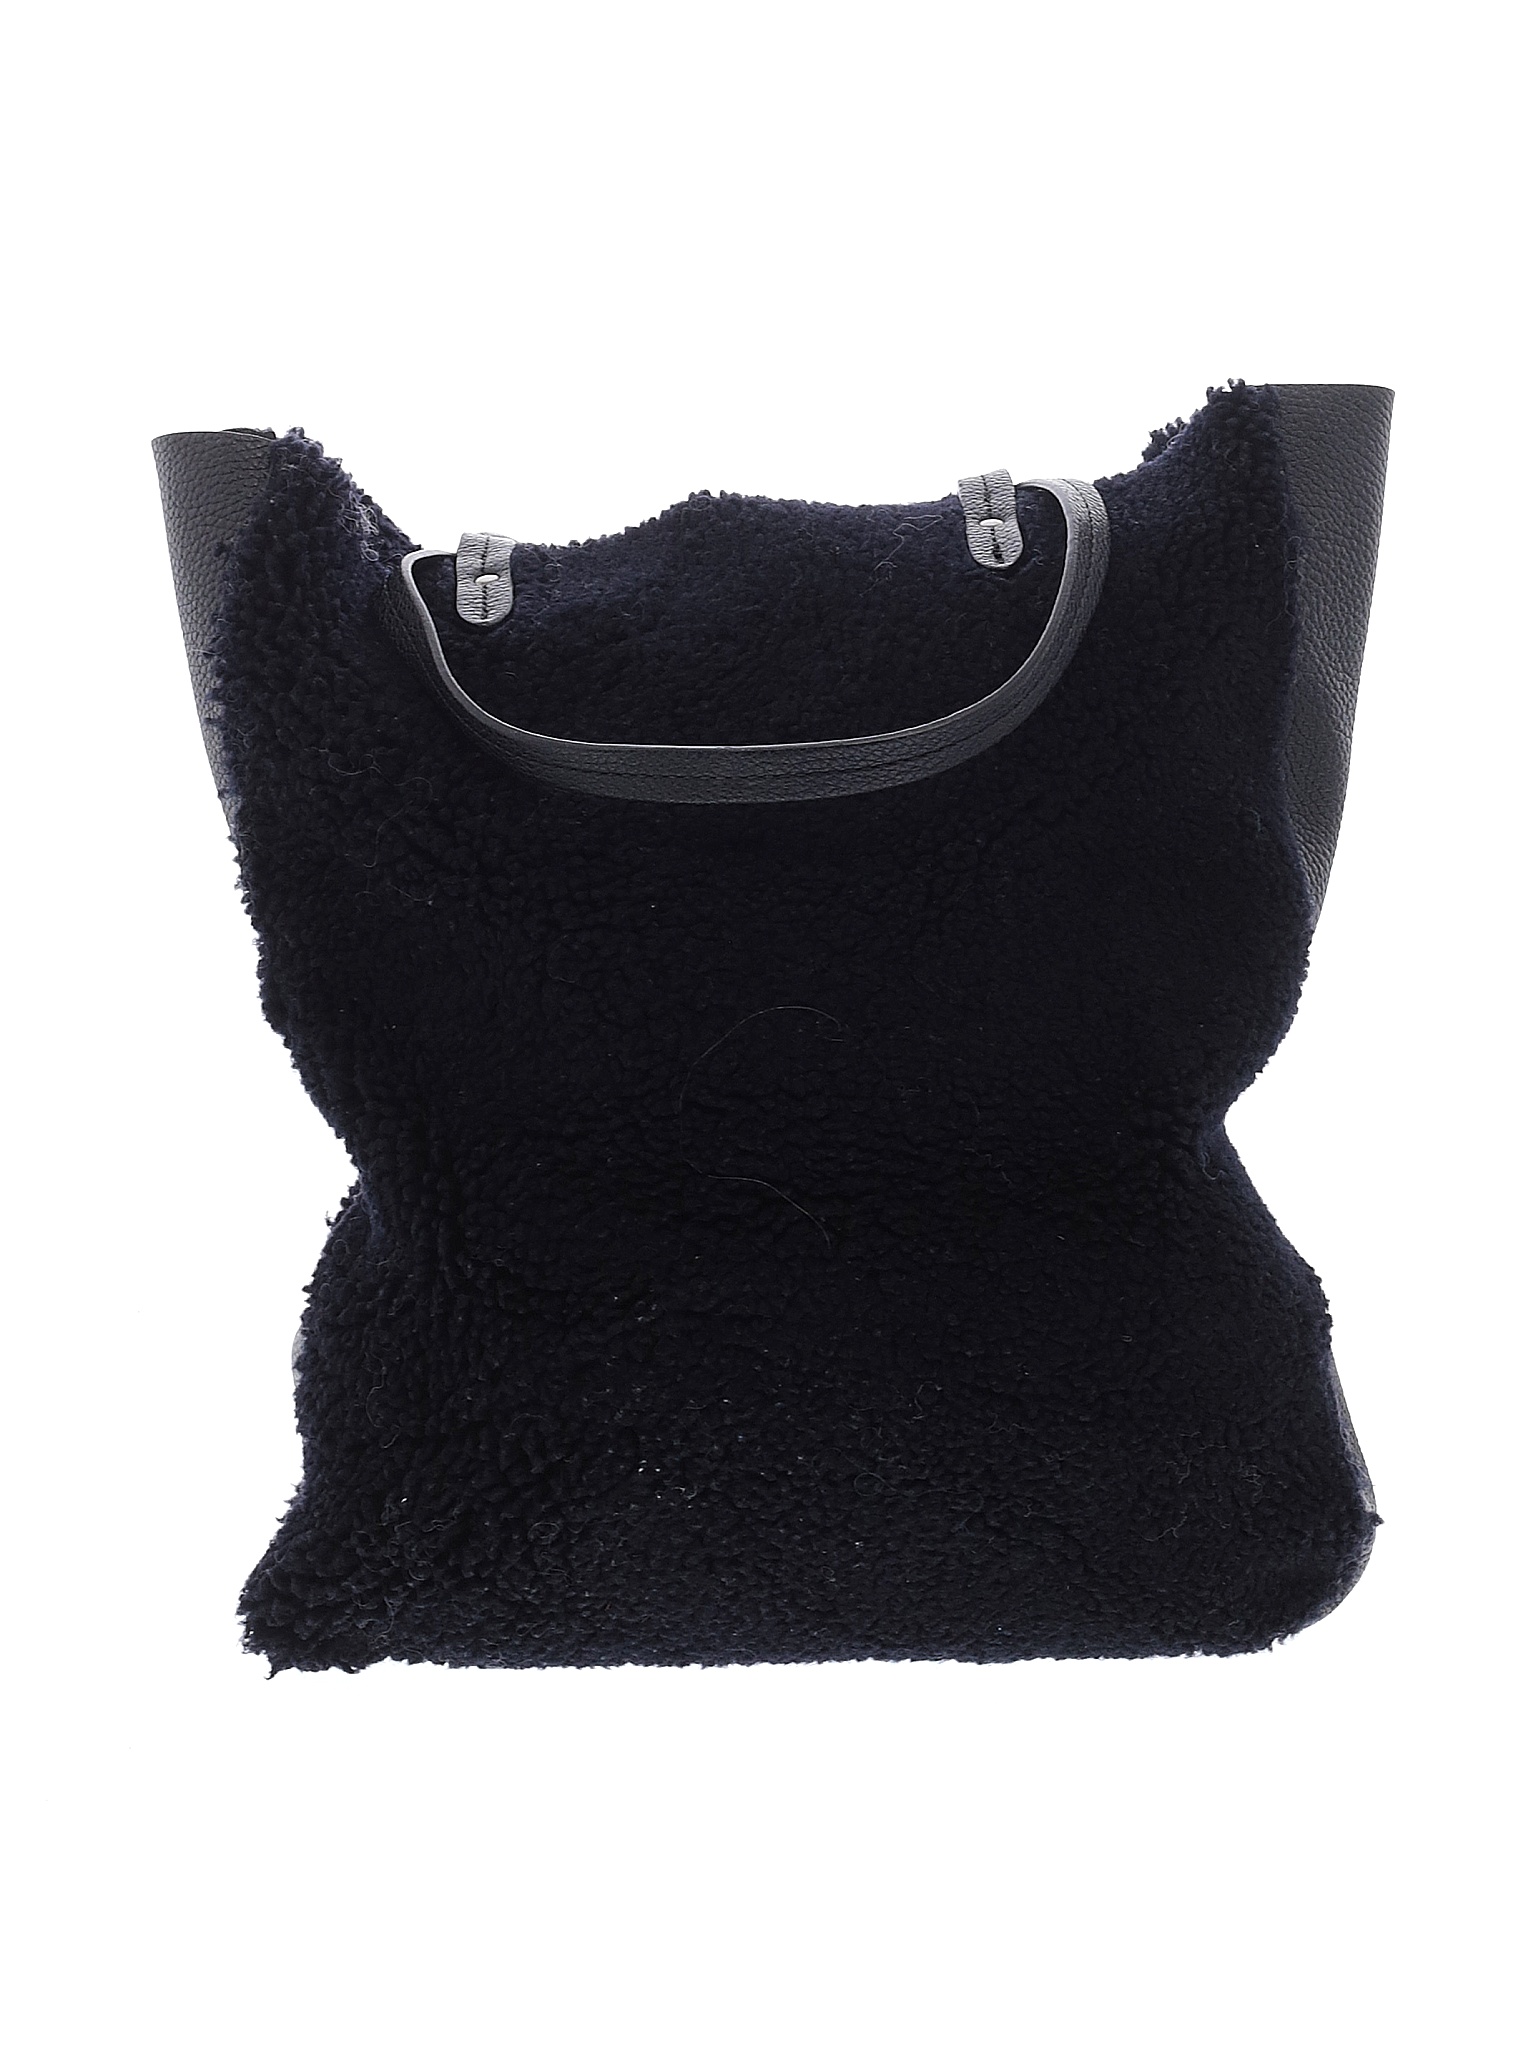 Barneys New York Handbags On Sale Up To 90% Off Retail | thredUP